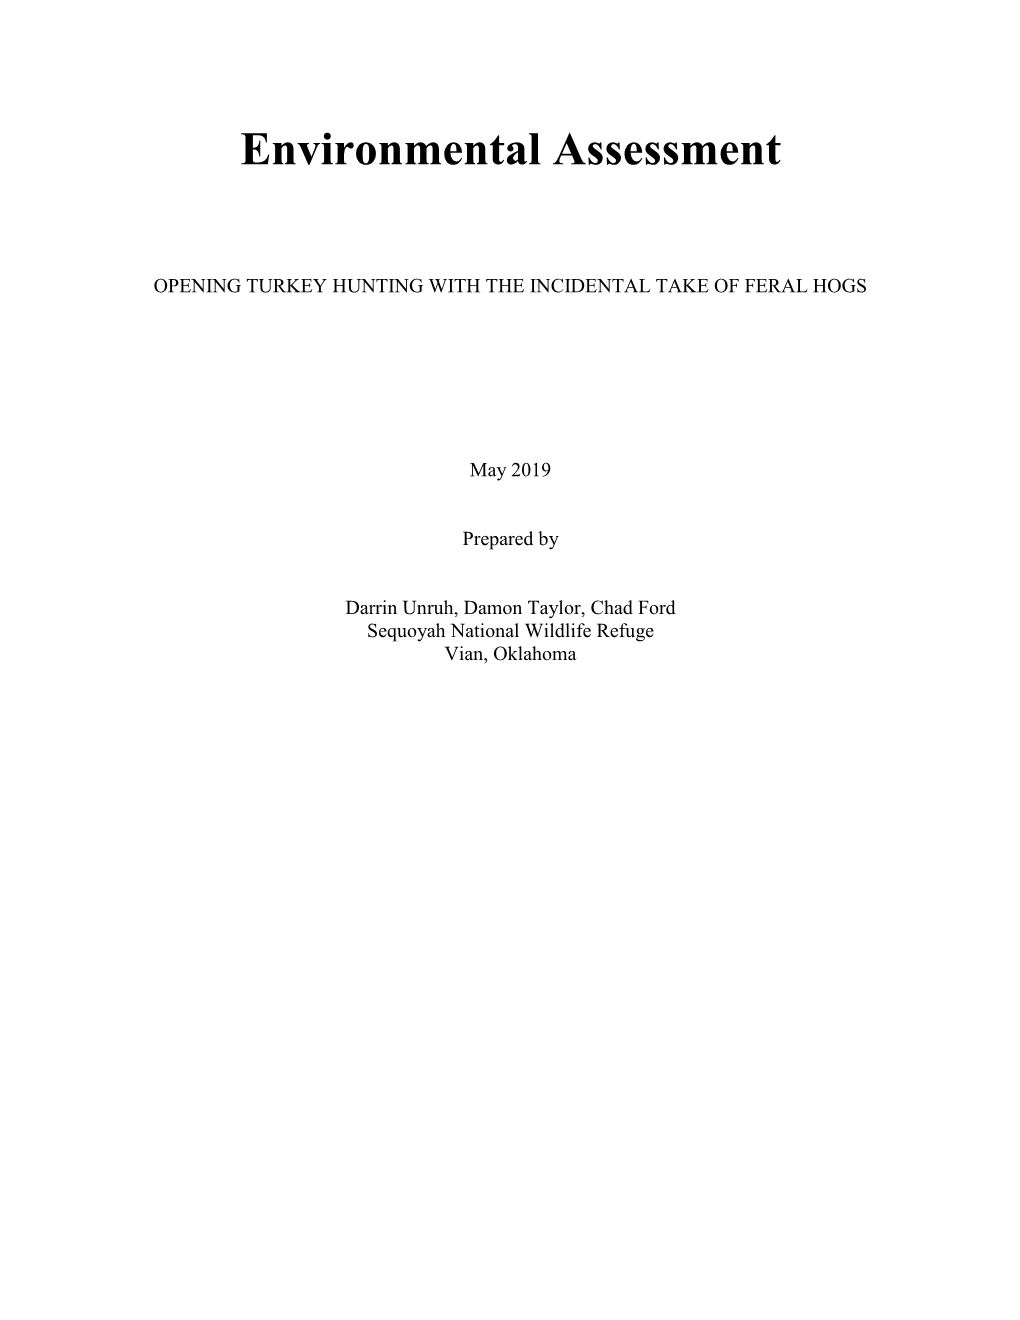 Draft Turkey Hunt Environmental Assessment